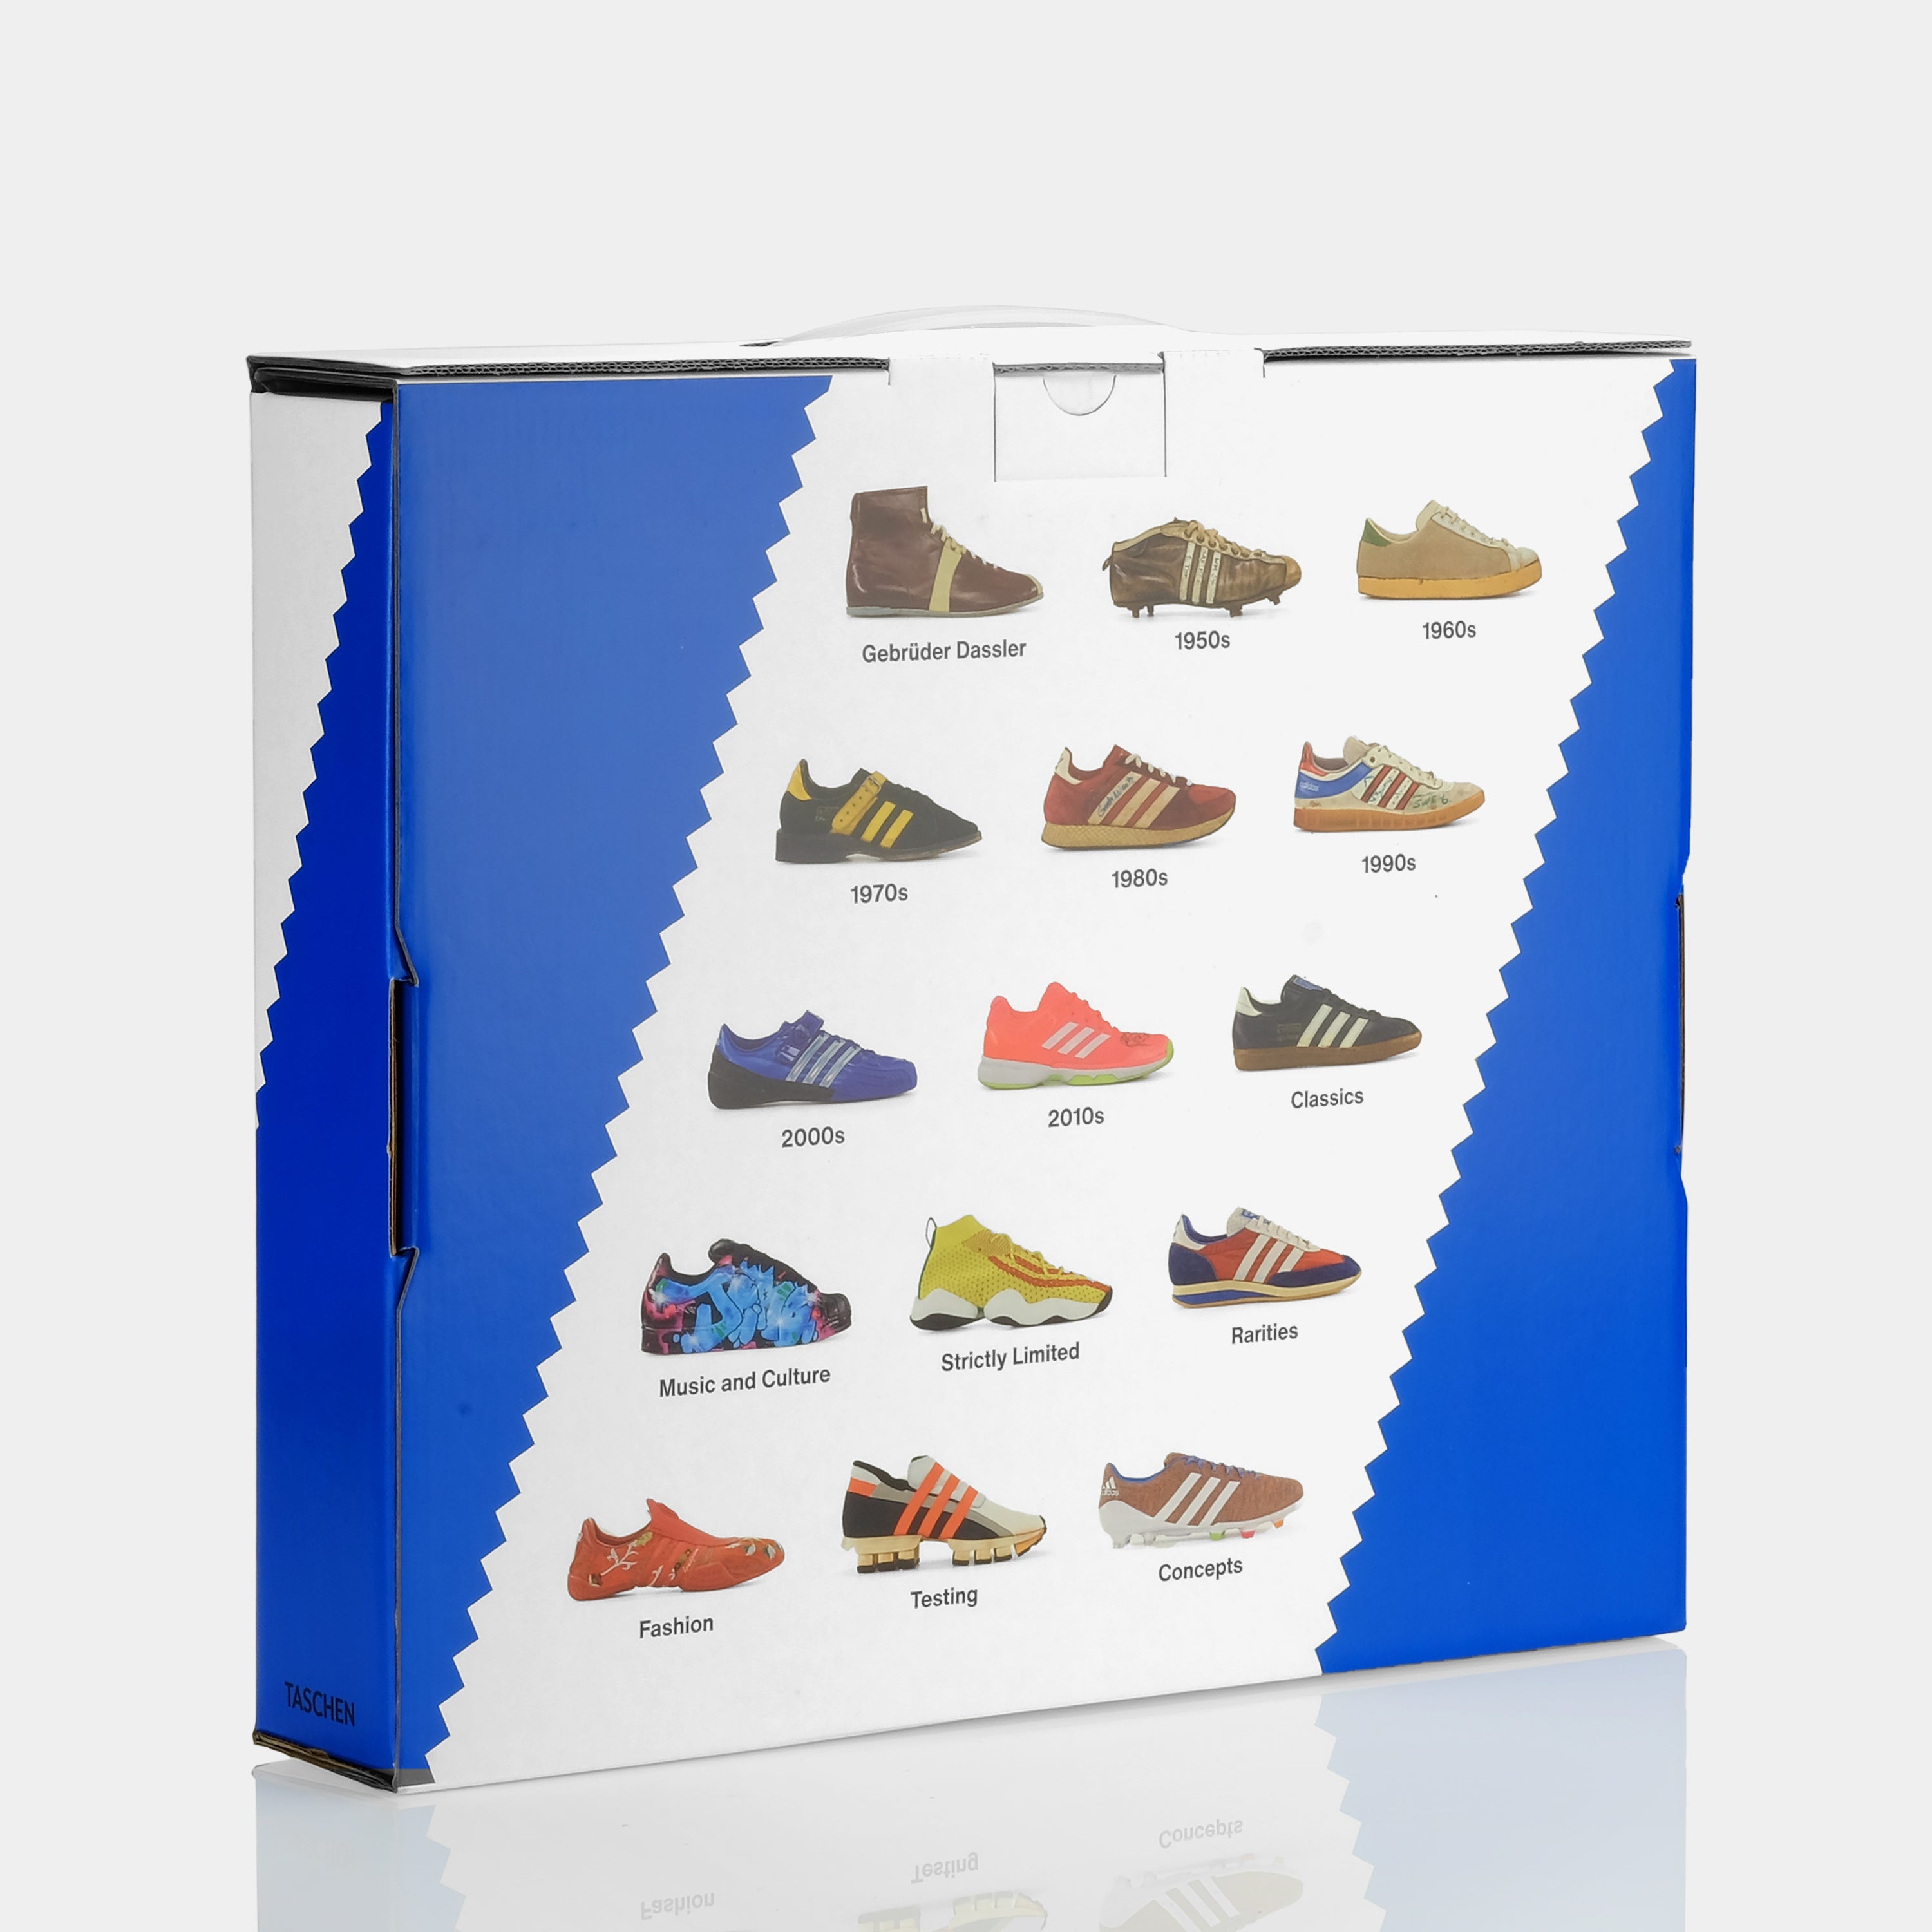 The Adidas Archive: The Footwear Collection by Christian Habermeier and Sebastian Jäger Taschen Book